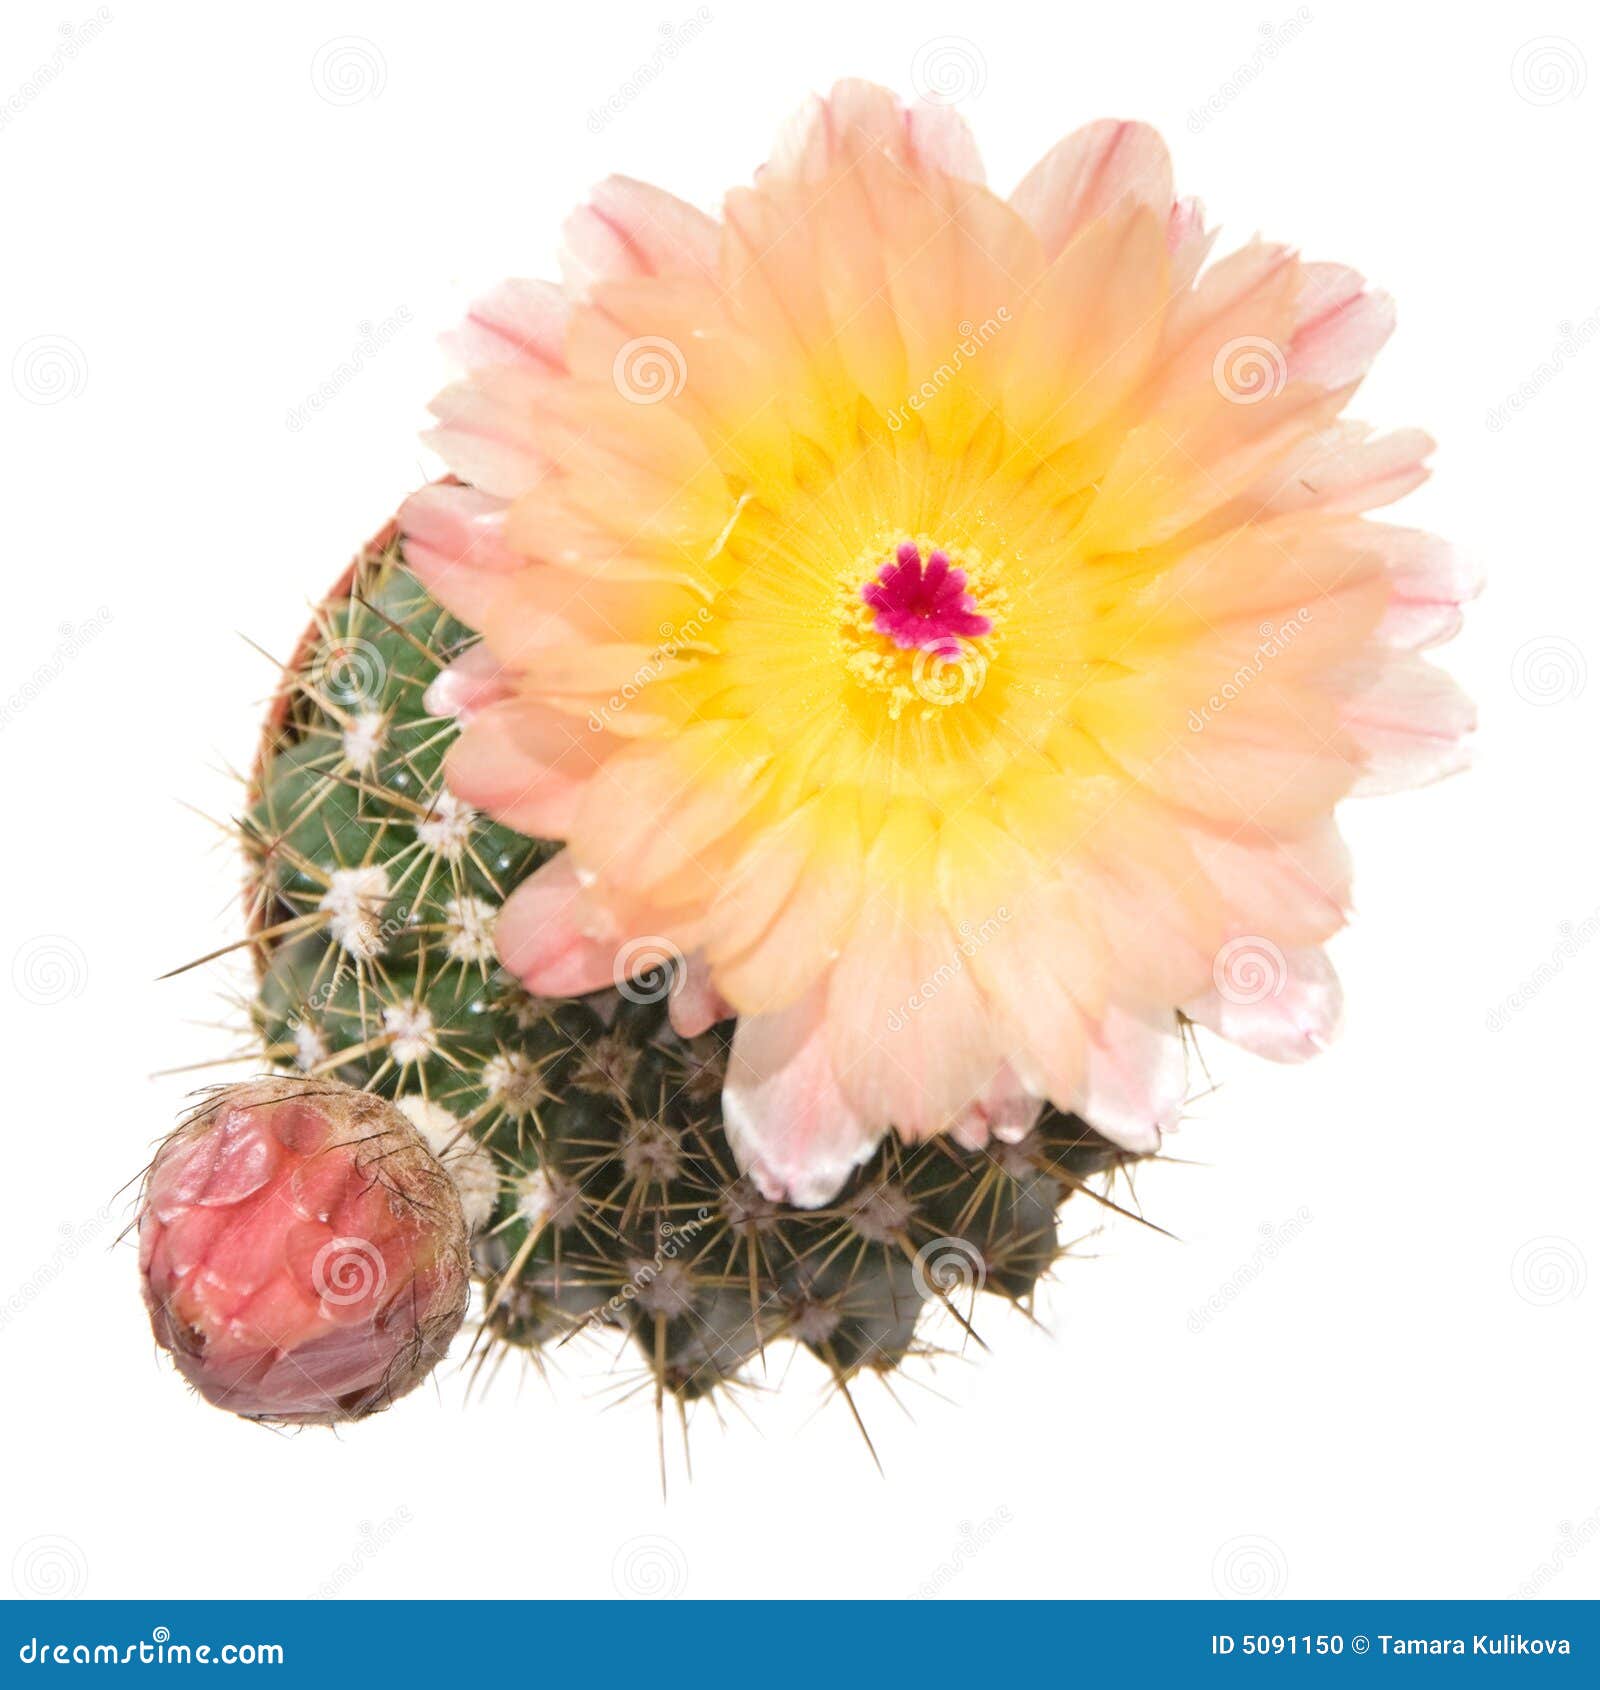 blooming cactus, 